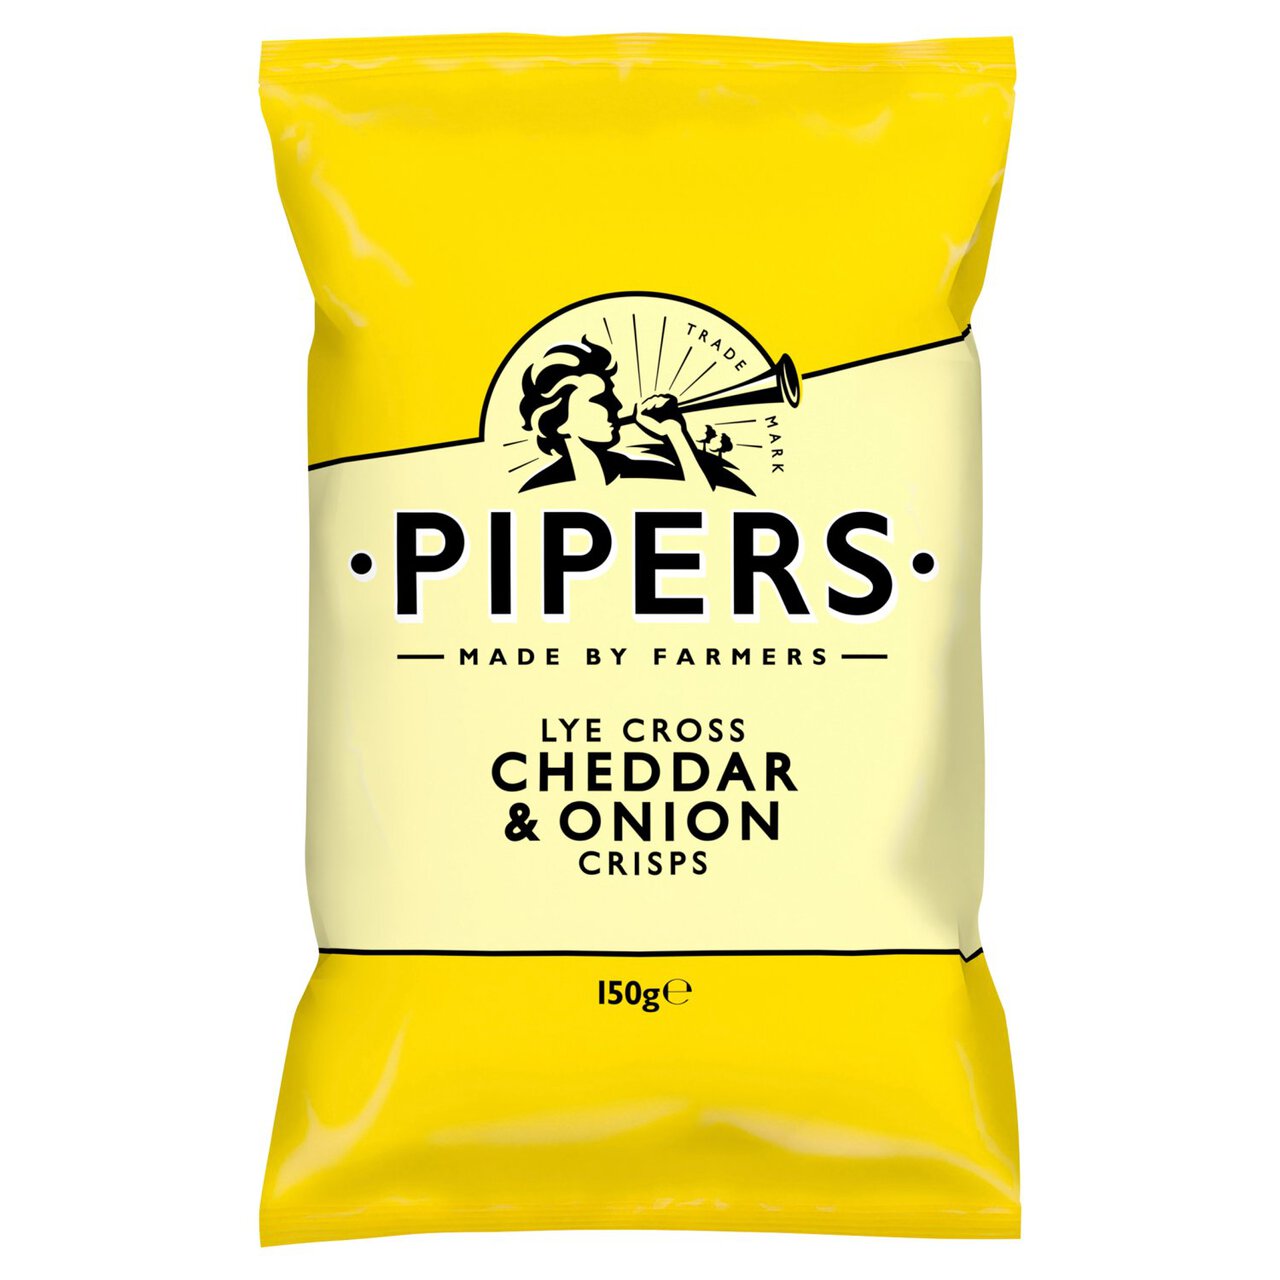 Pipers Lye Cross Cheddar & Onion Sharing Bag Crisps 150g